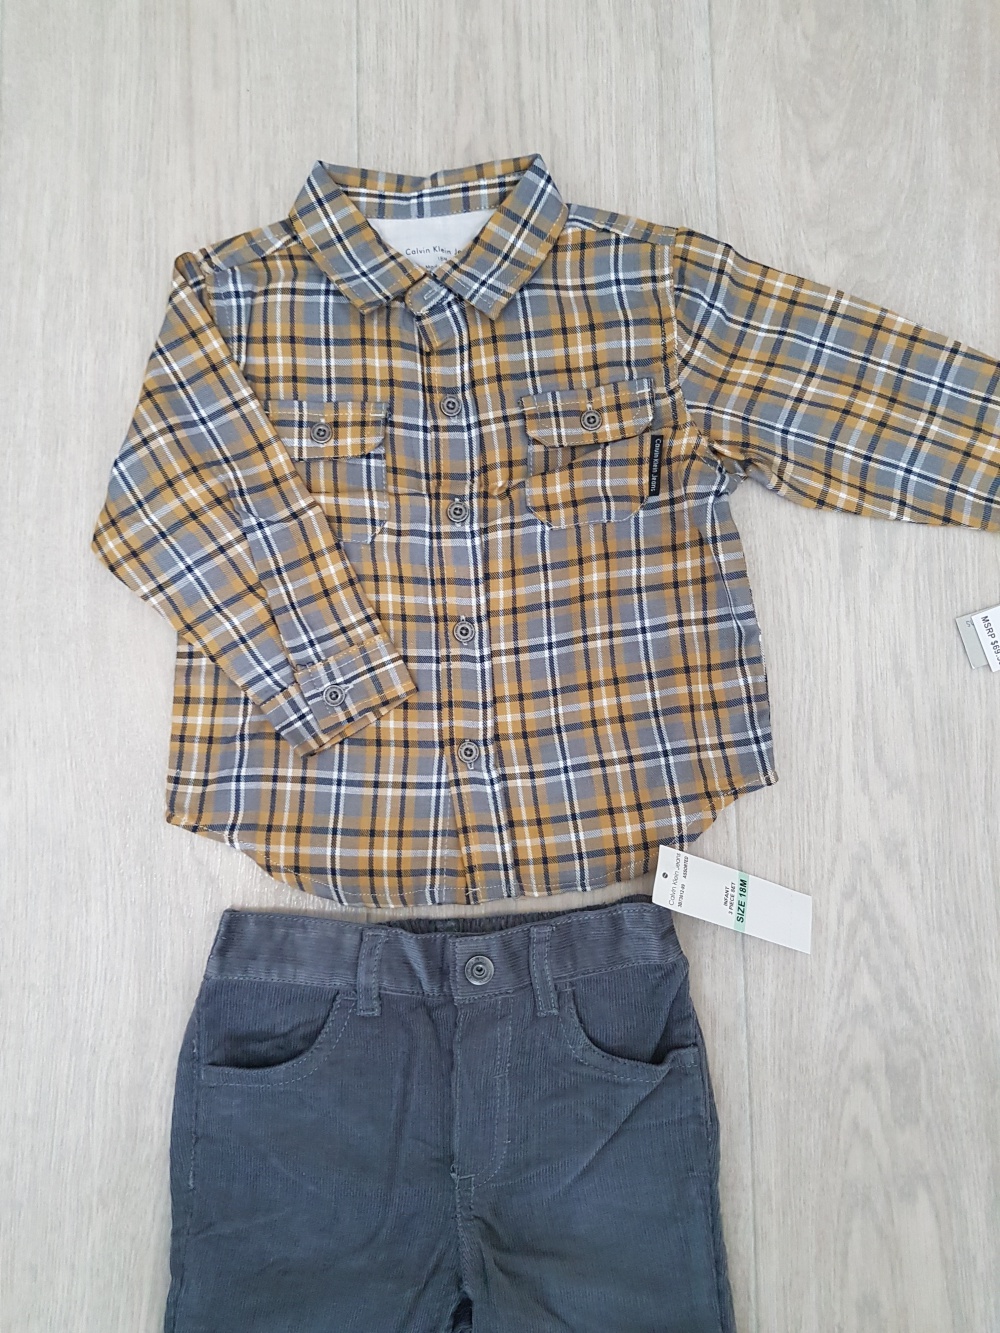 Calvin Klein комплект 3-ка (рубашка + джинсы + жилетка) на мальчика, размер 18 мес. (1,5 года)